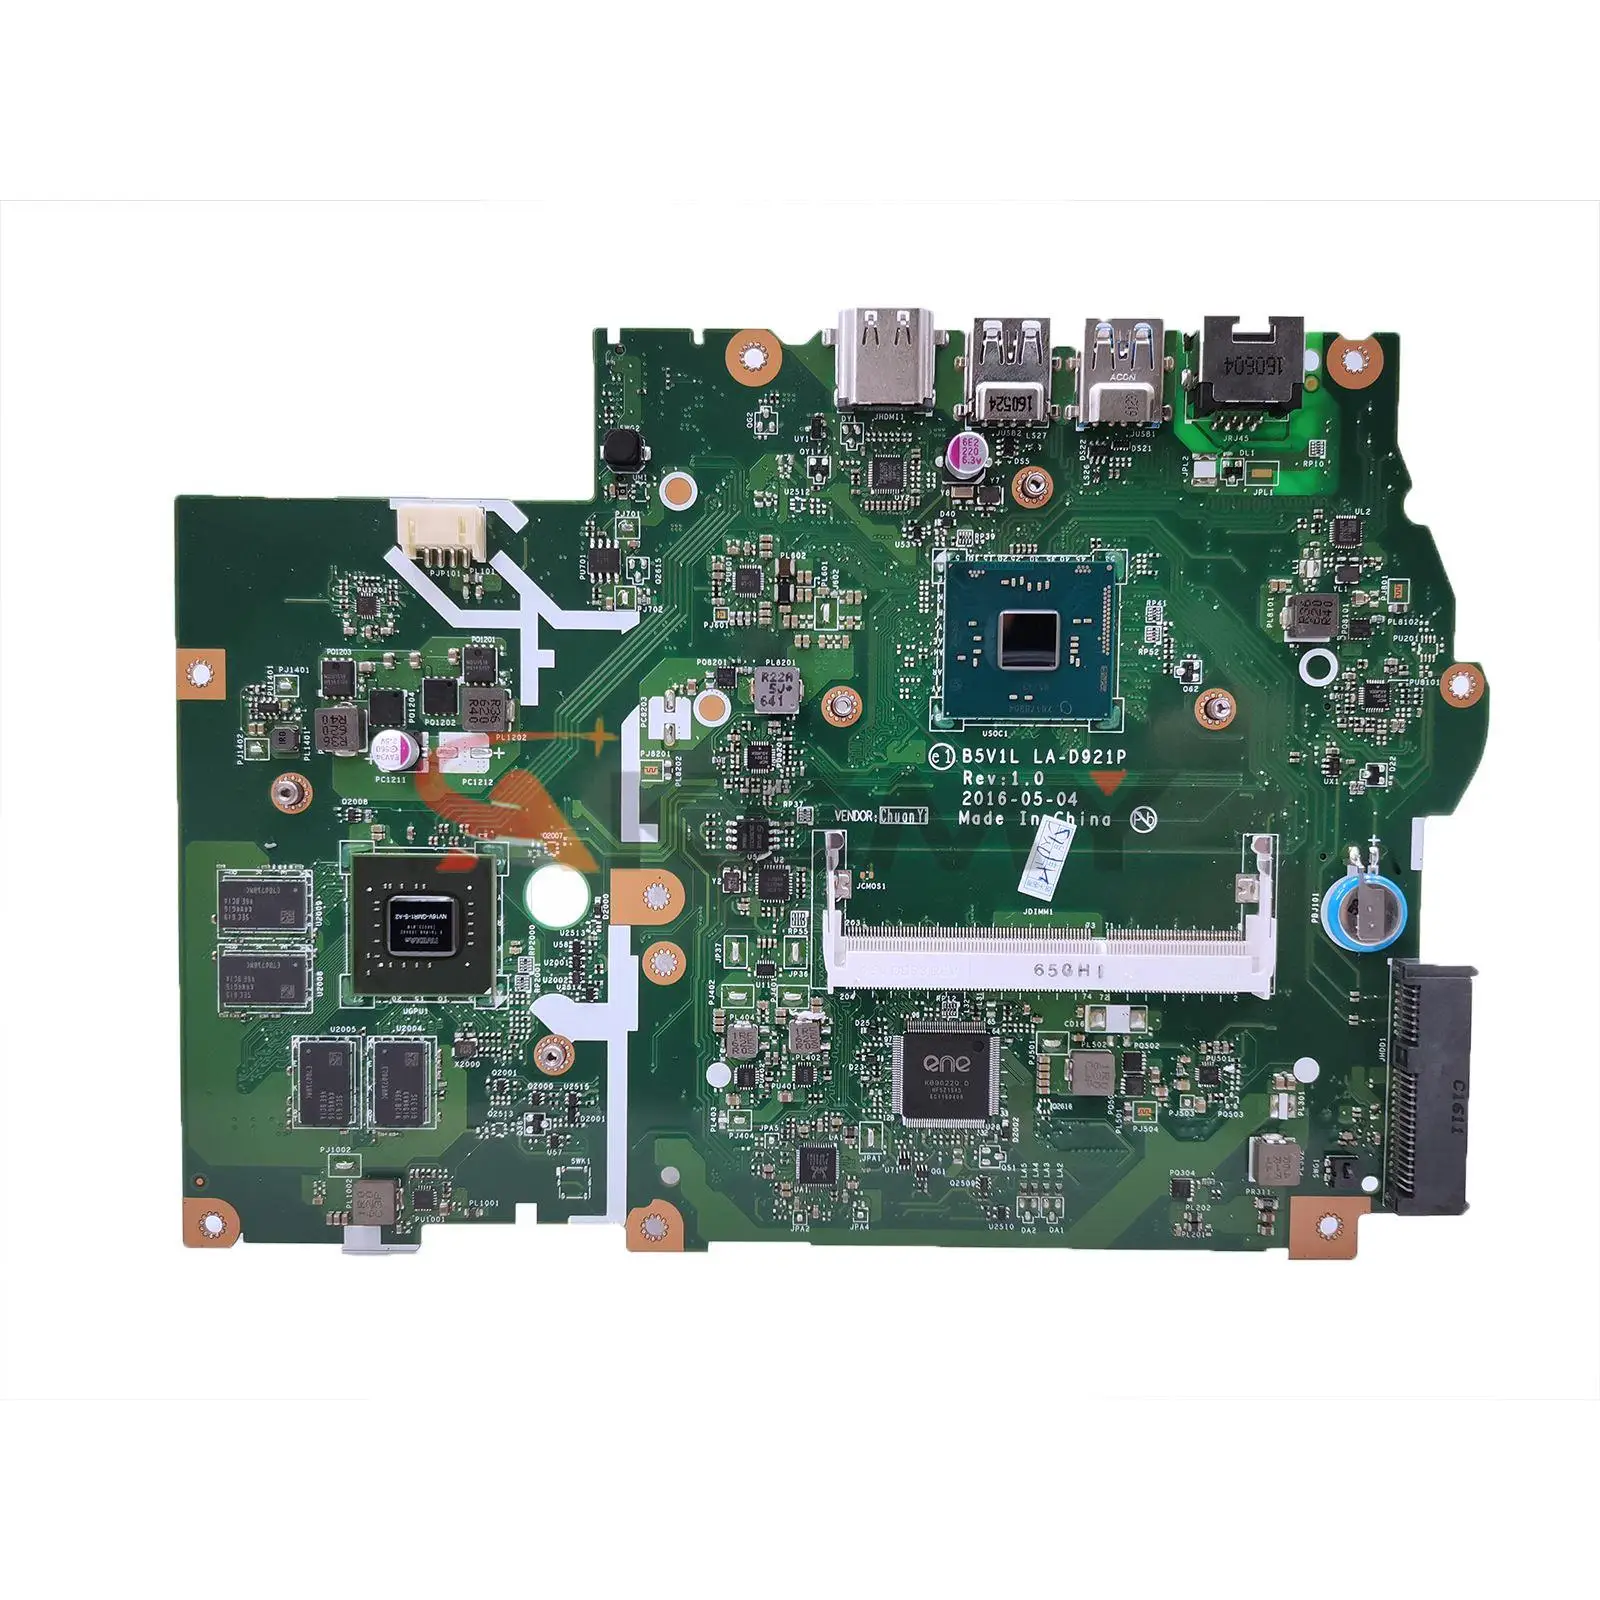 

NBGHC11001 NB.GHC11.001 B5V1L LA-D921P For ACER aspire ES1-532 laptop motherboard with 920MX GPU N3160 CPU mainboard 100% tested